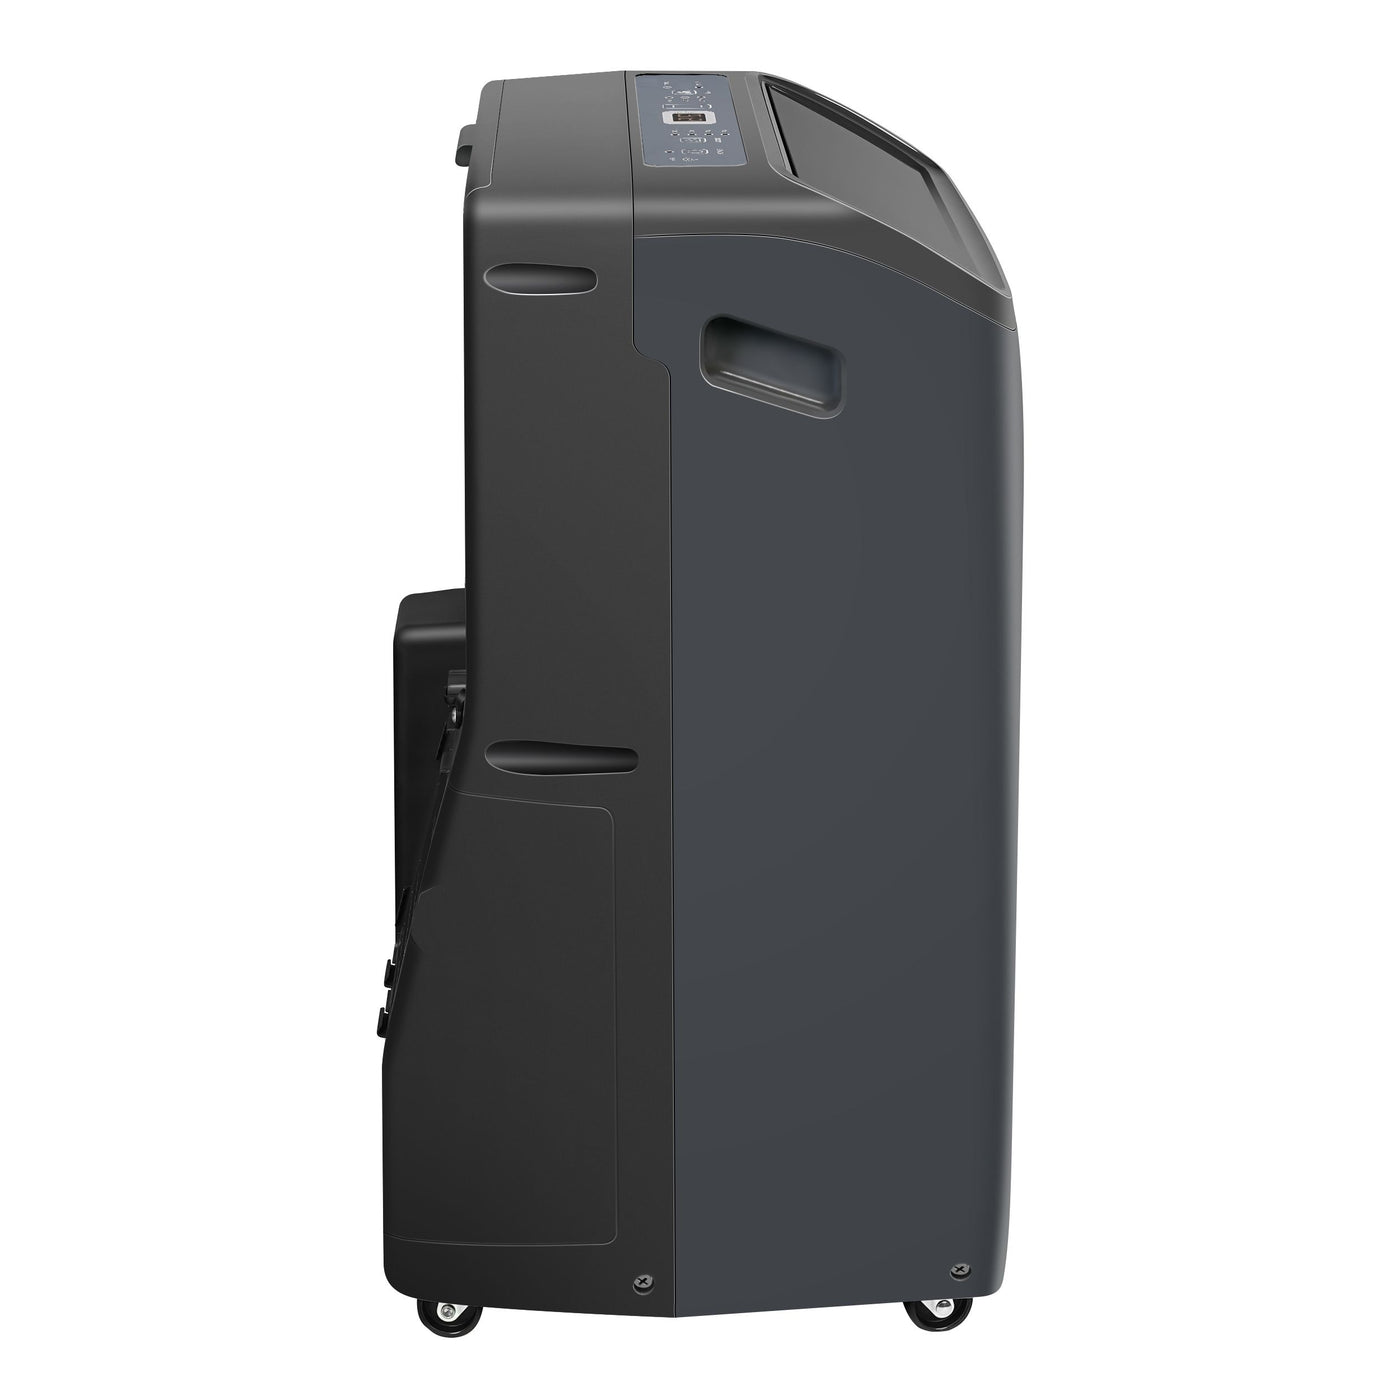 Hisense Black 10,000 BTU (SACC) Smart Dual Hose Portable Air Conditioner with Heat Pump - AP1022HW1GD